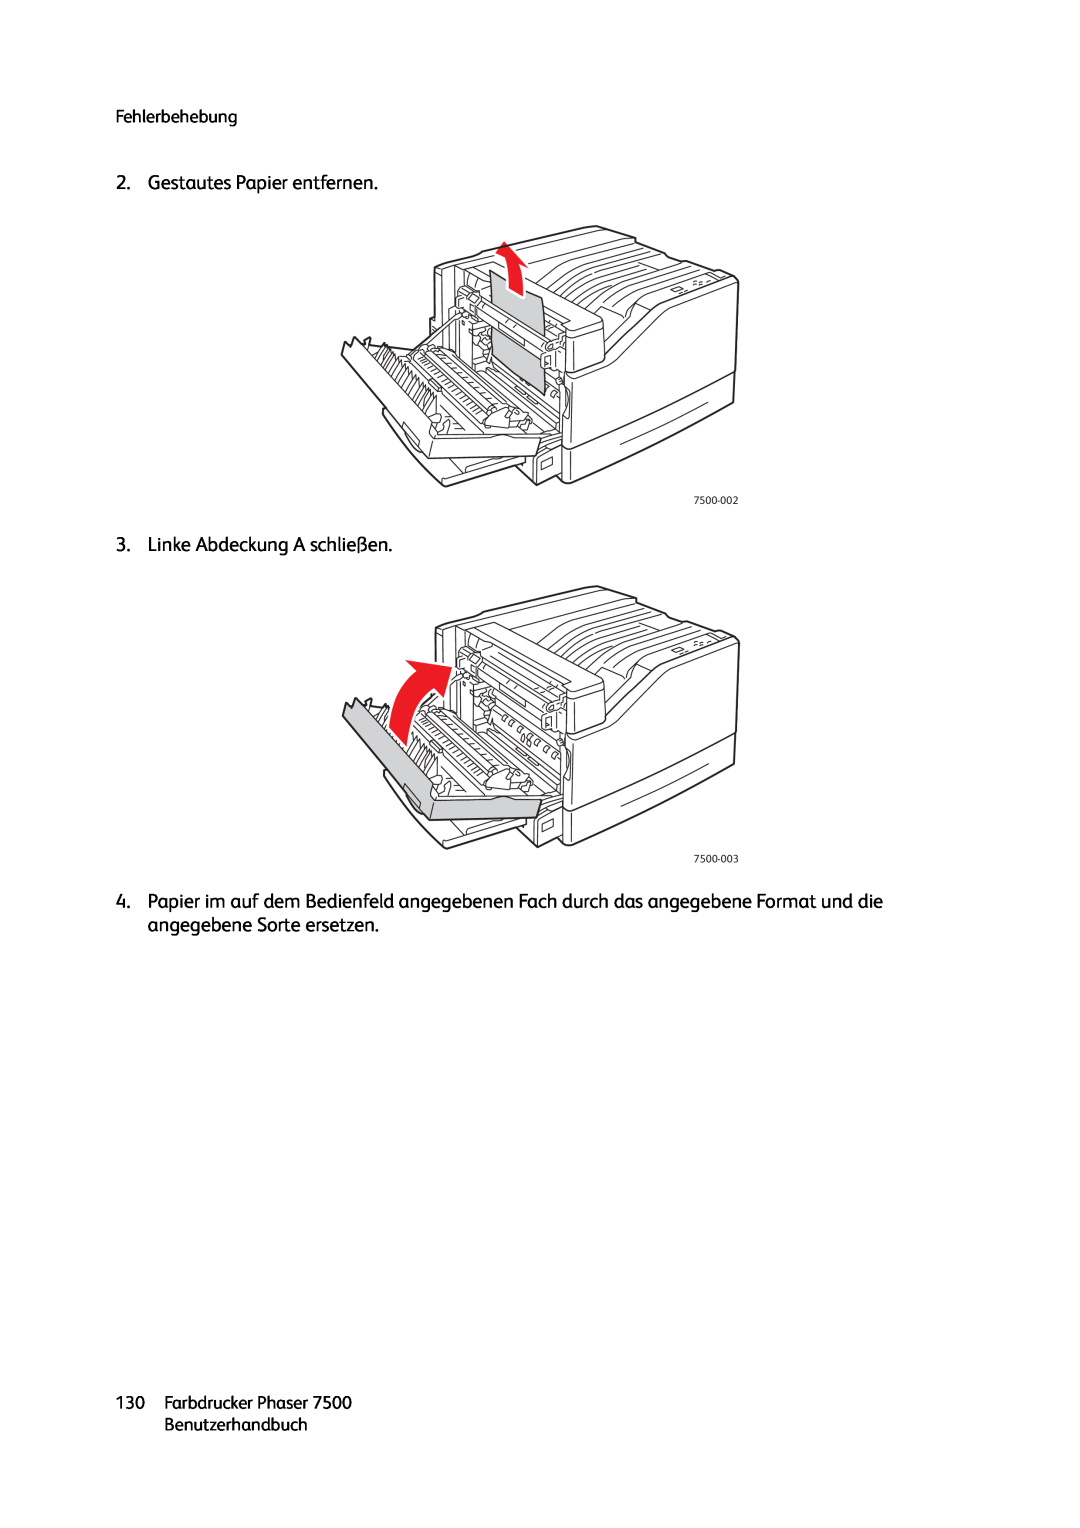 Xerox 7500 color printer manual Gestautes Papier entfernen, Linke Abdeckung A schließen, Fehlerbehebung, 7500-002, 7500-003 